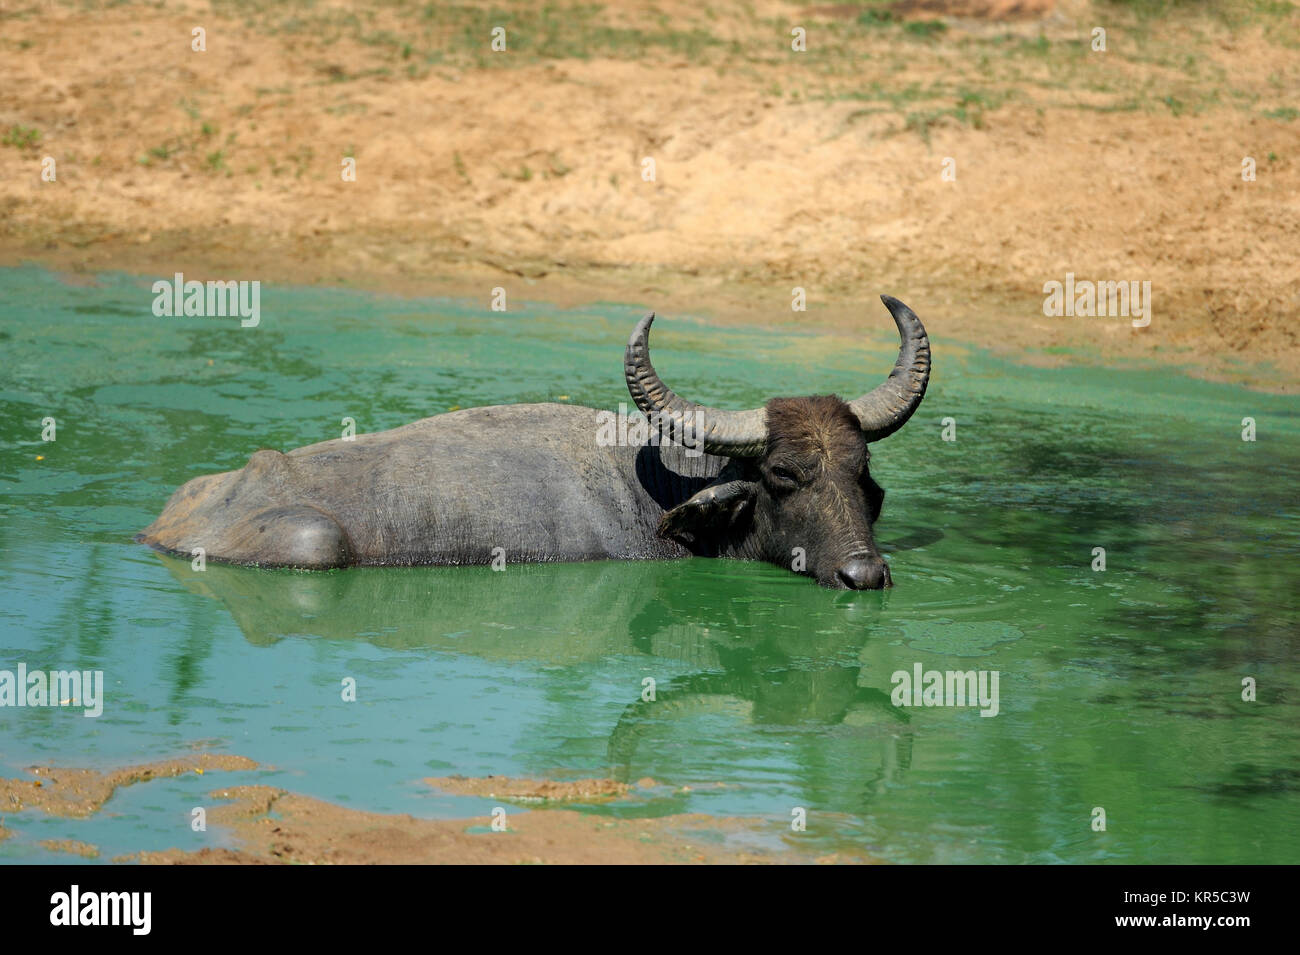 Water buffalo sri lanka hi-res stock photography and images - Alamy